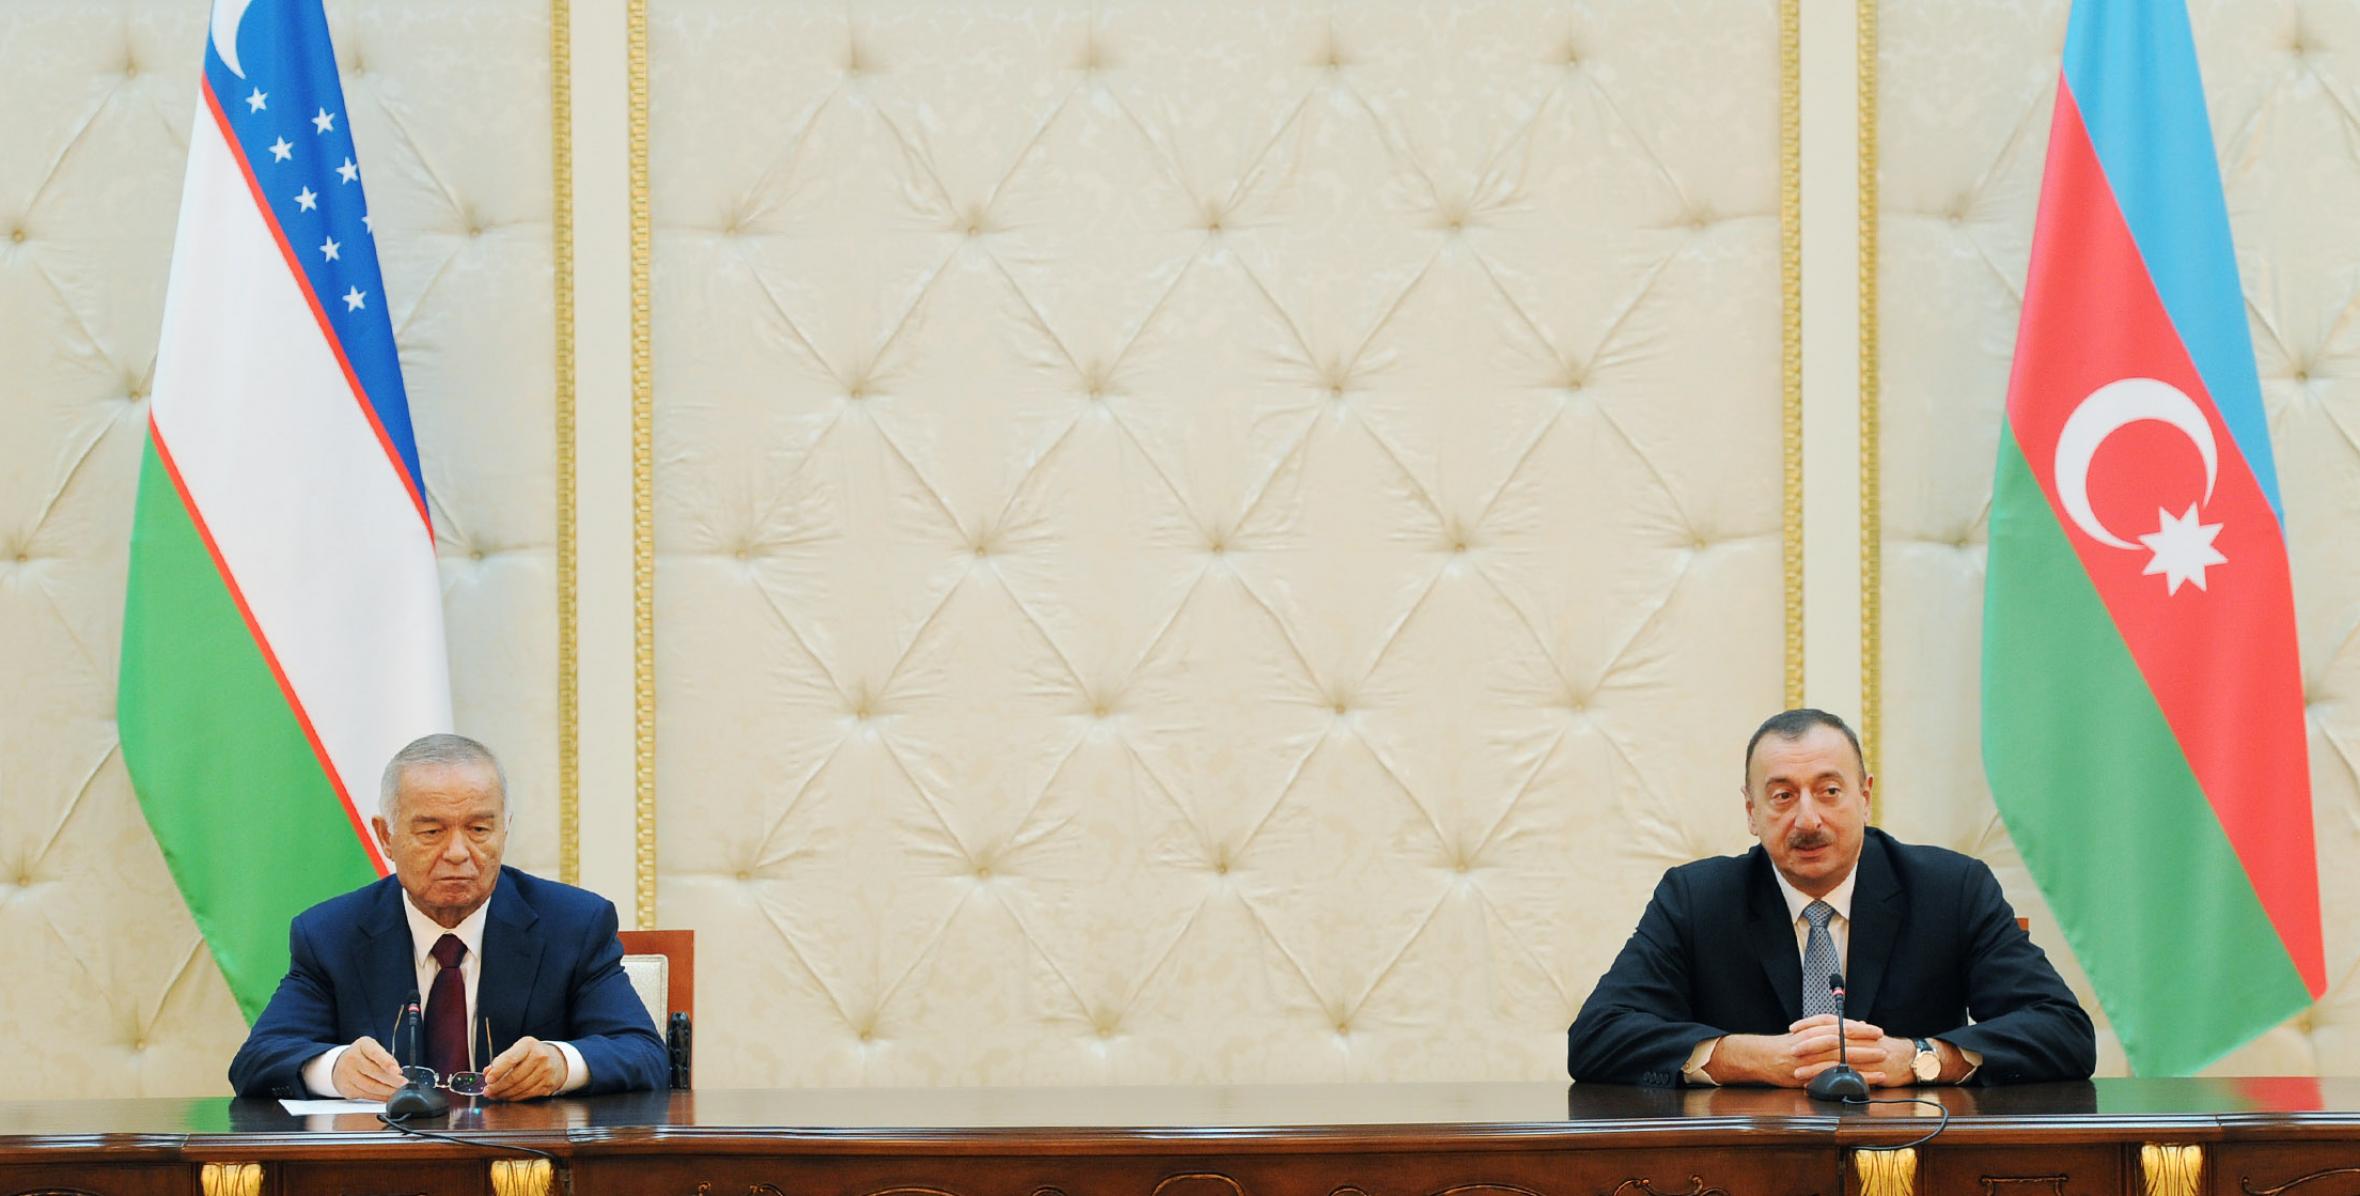 Presidents of Azerbaijan and Uzbekistan made statements for the press